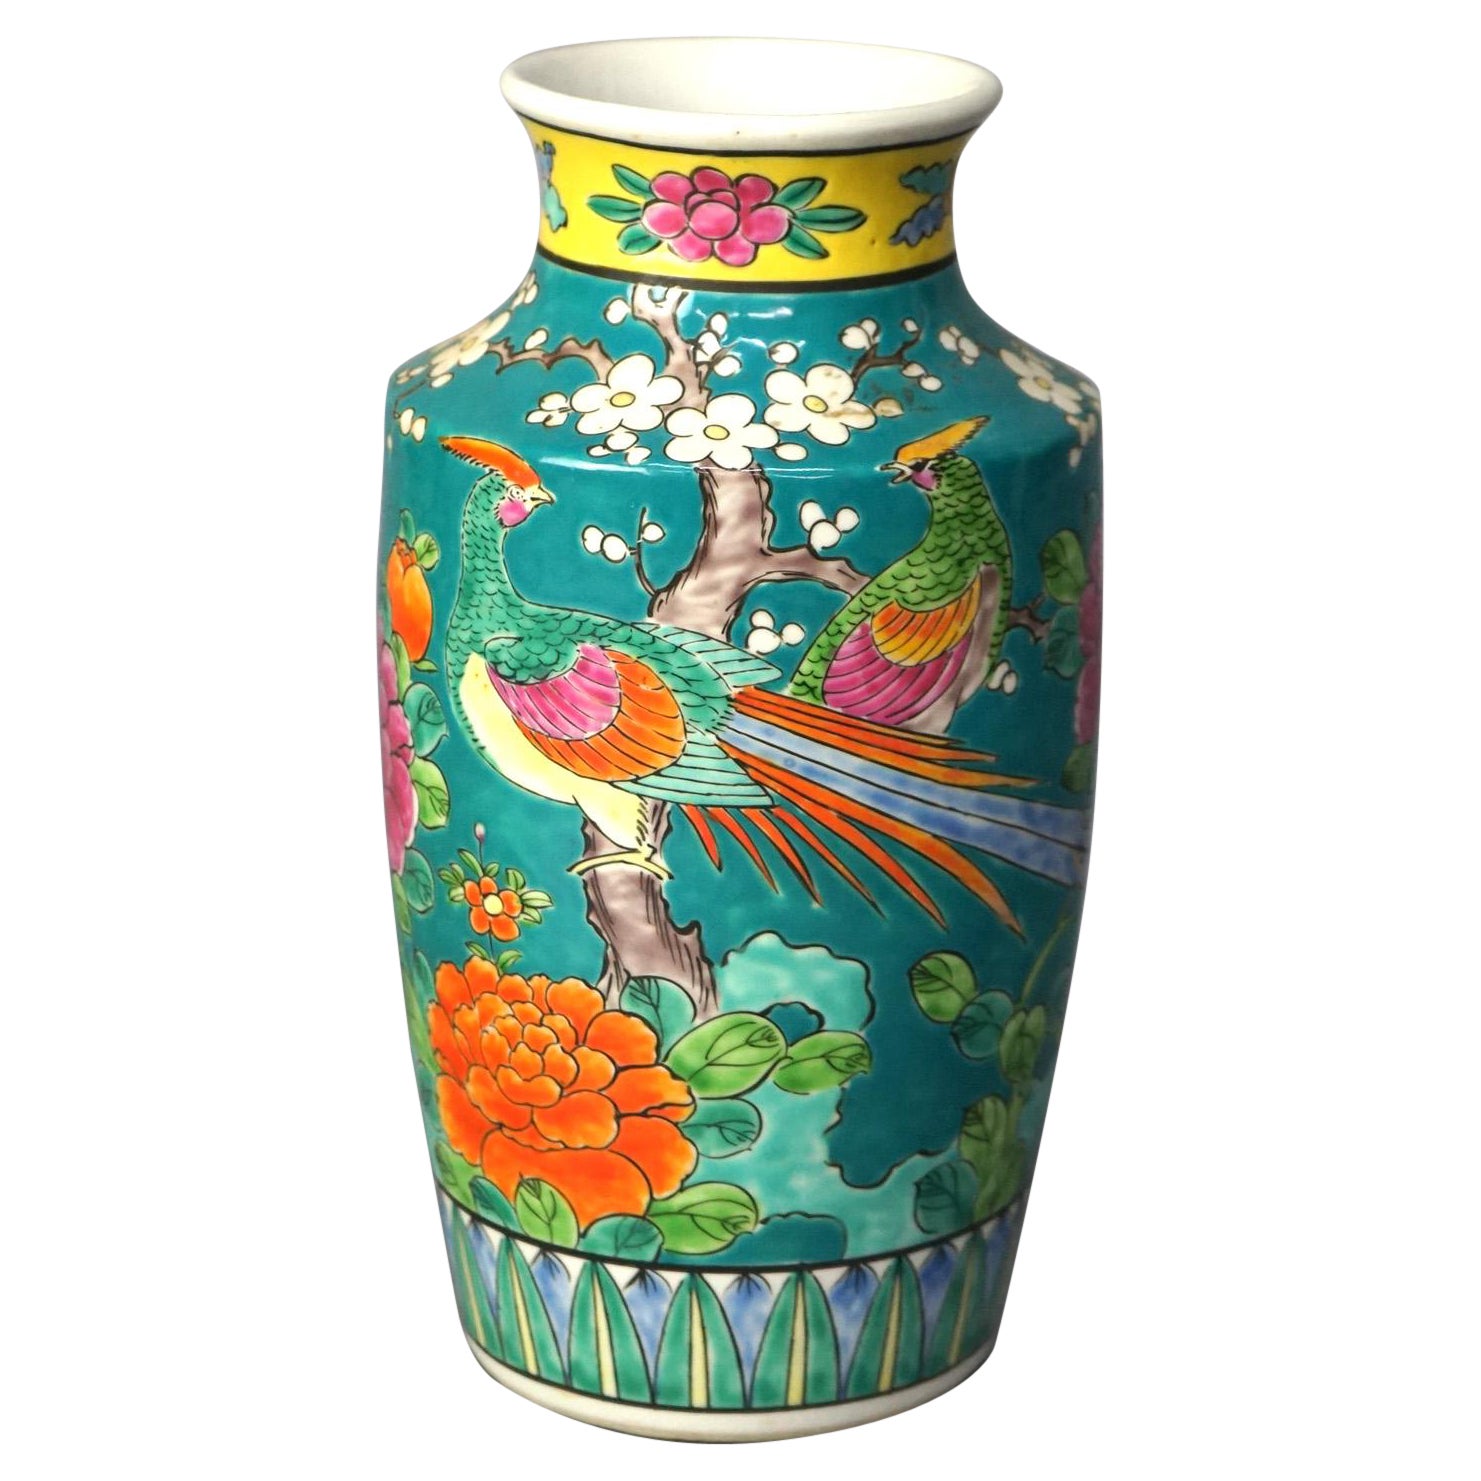 Antique Japanese Porcelain Enameled Garden Scene Vase with Birds & Flowers C1910 For Sale